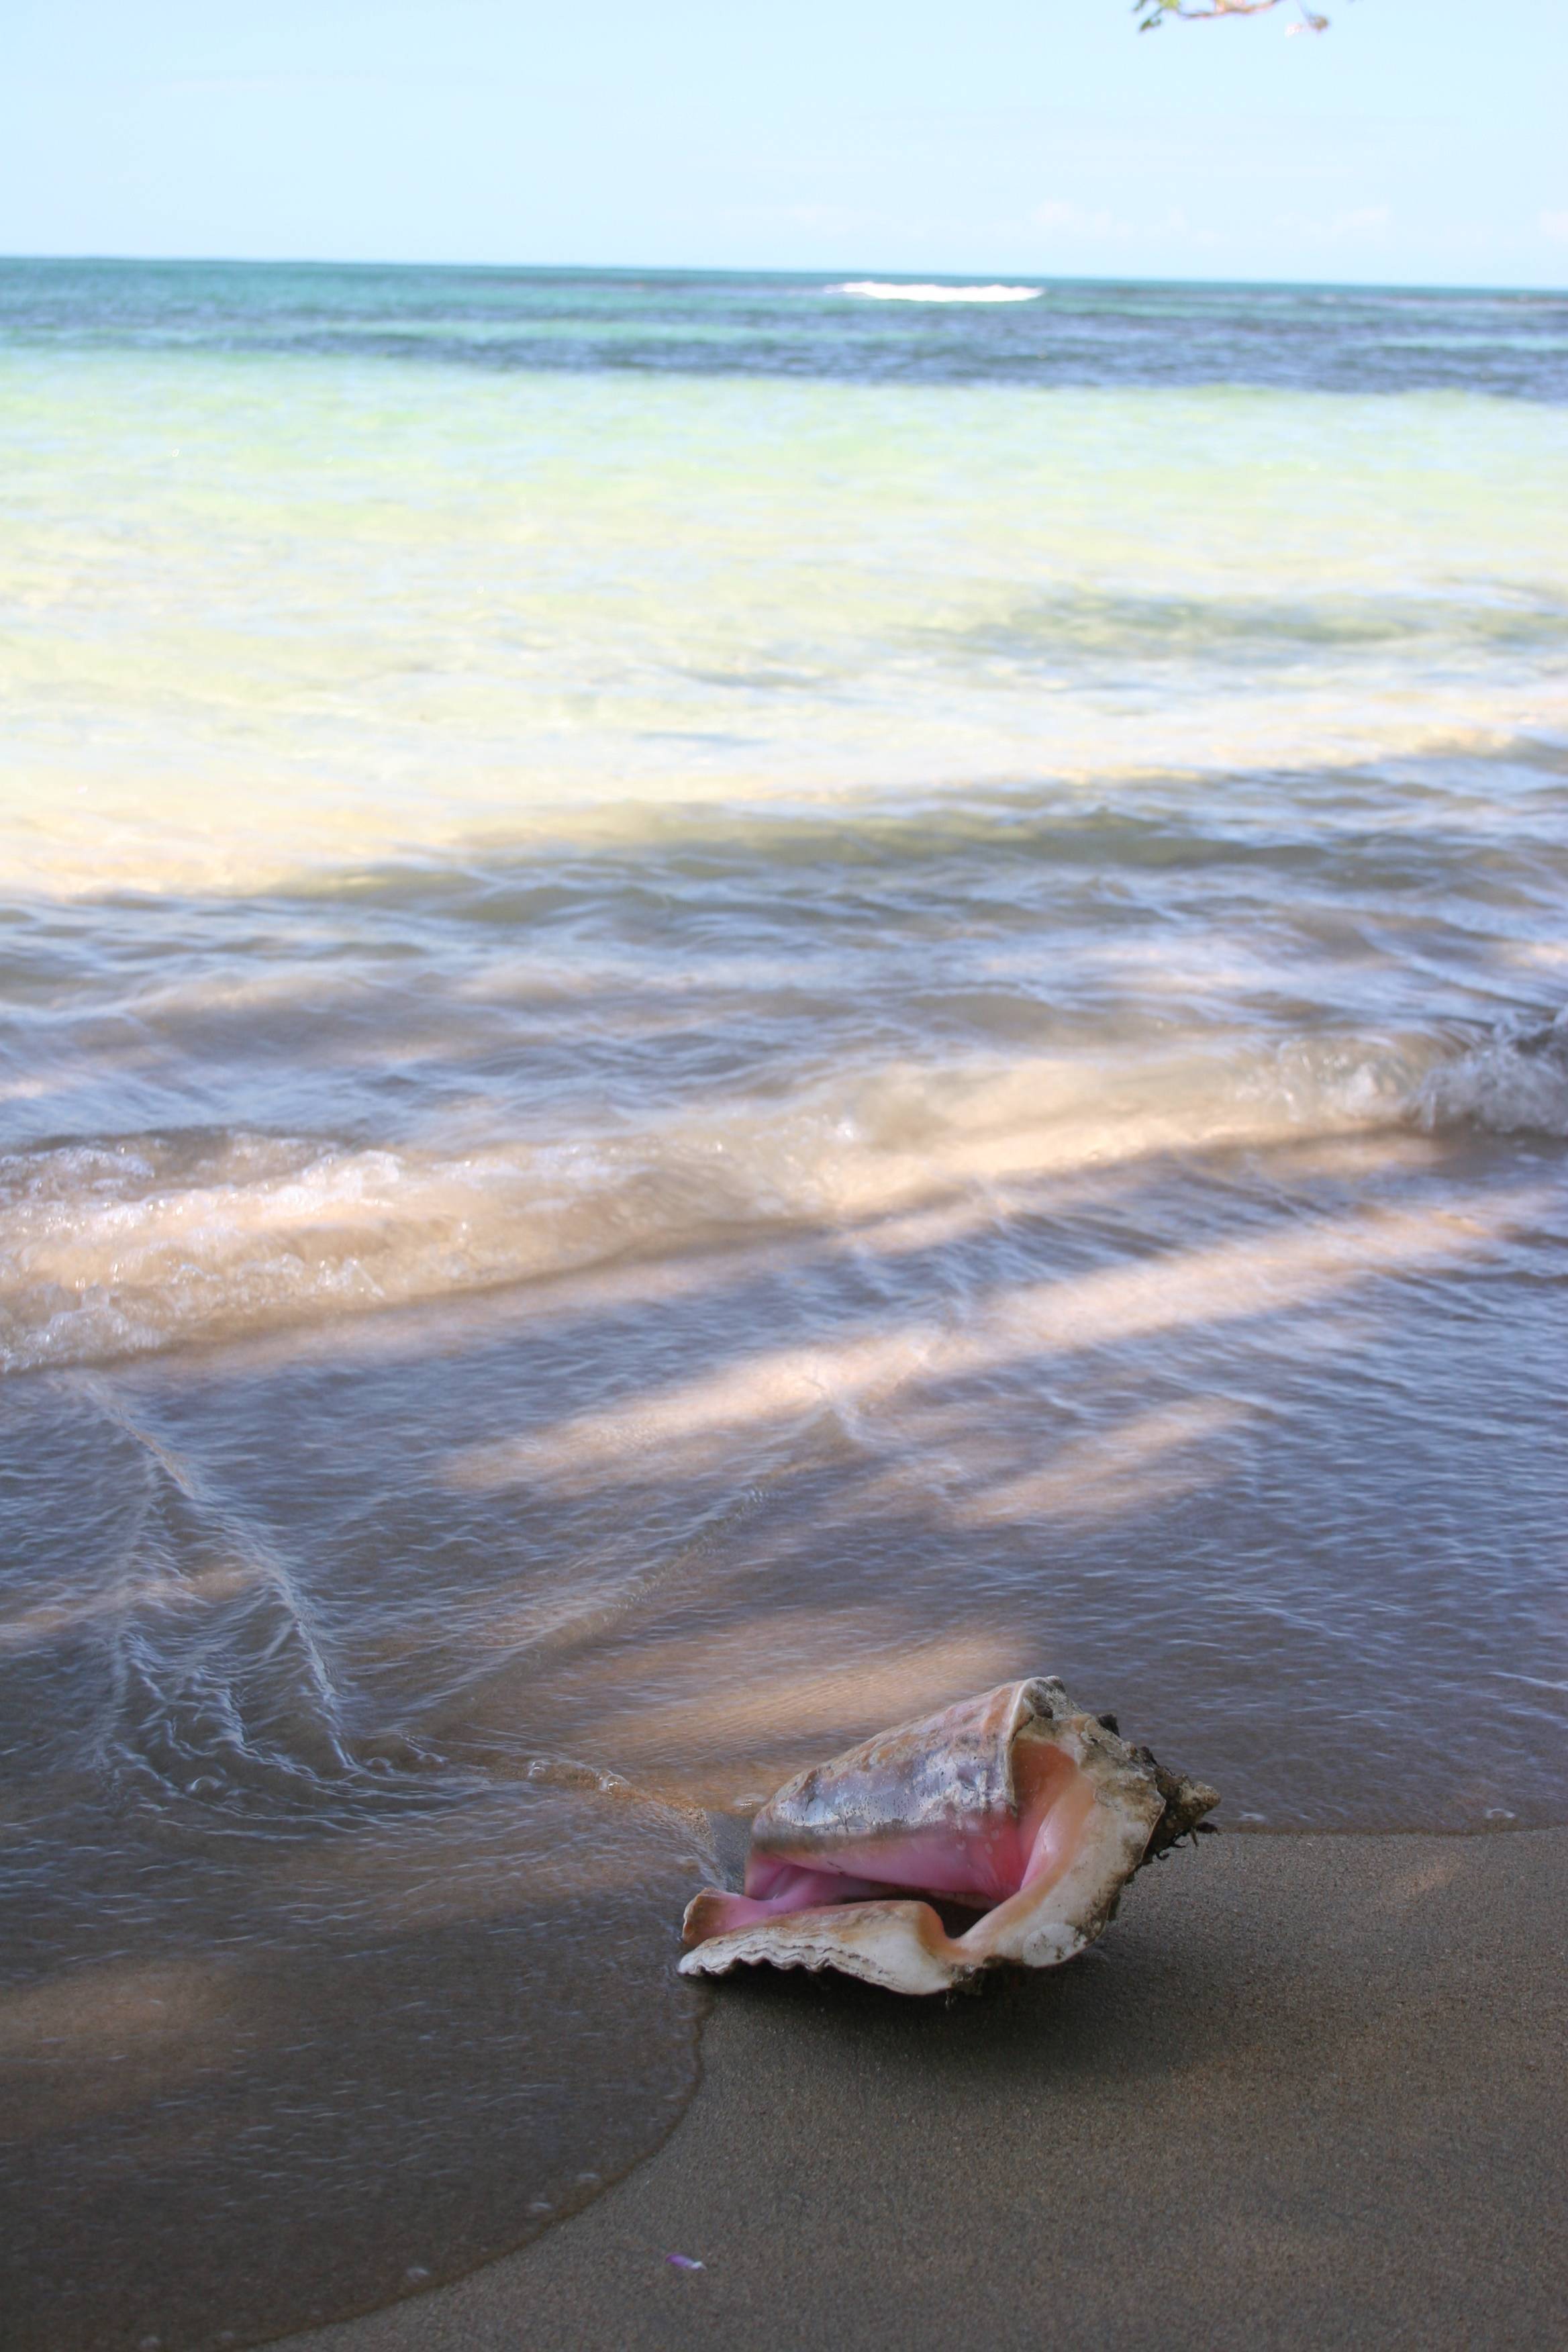 a conch on a beach